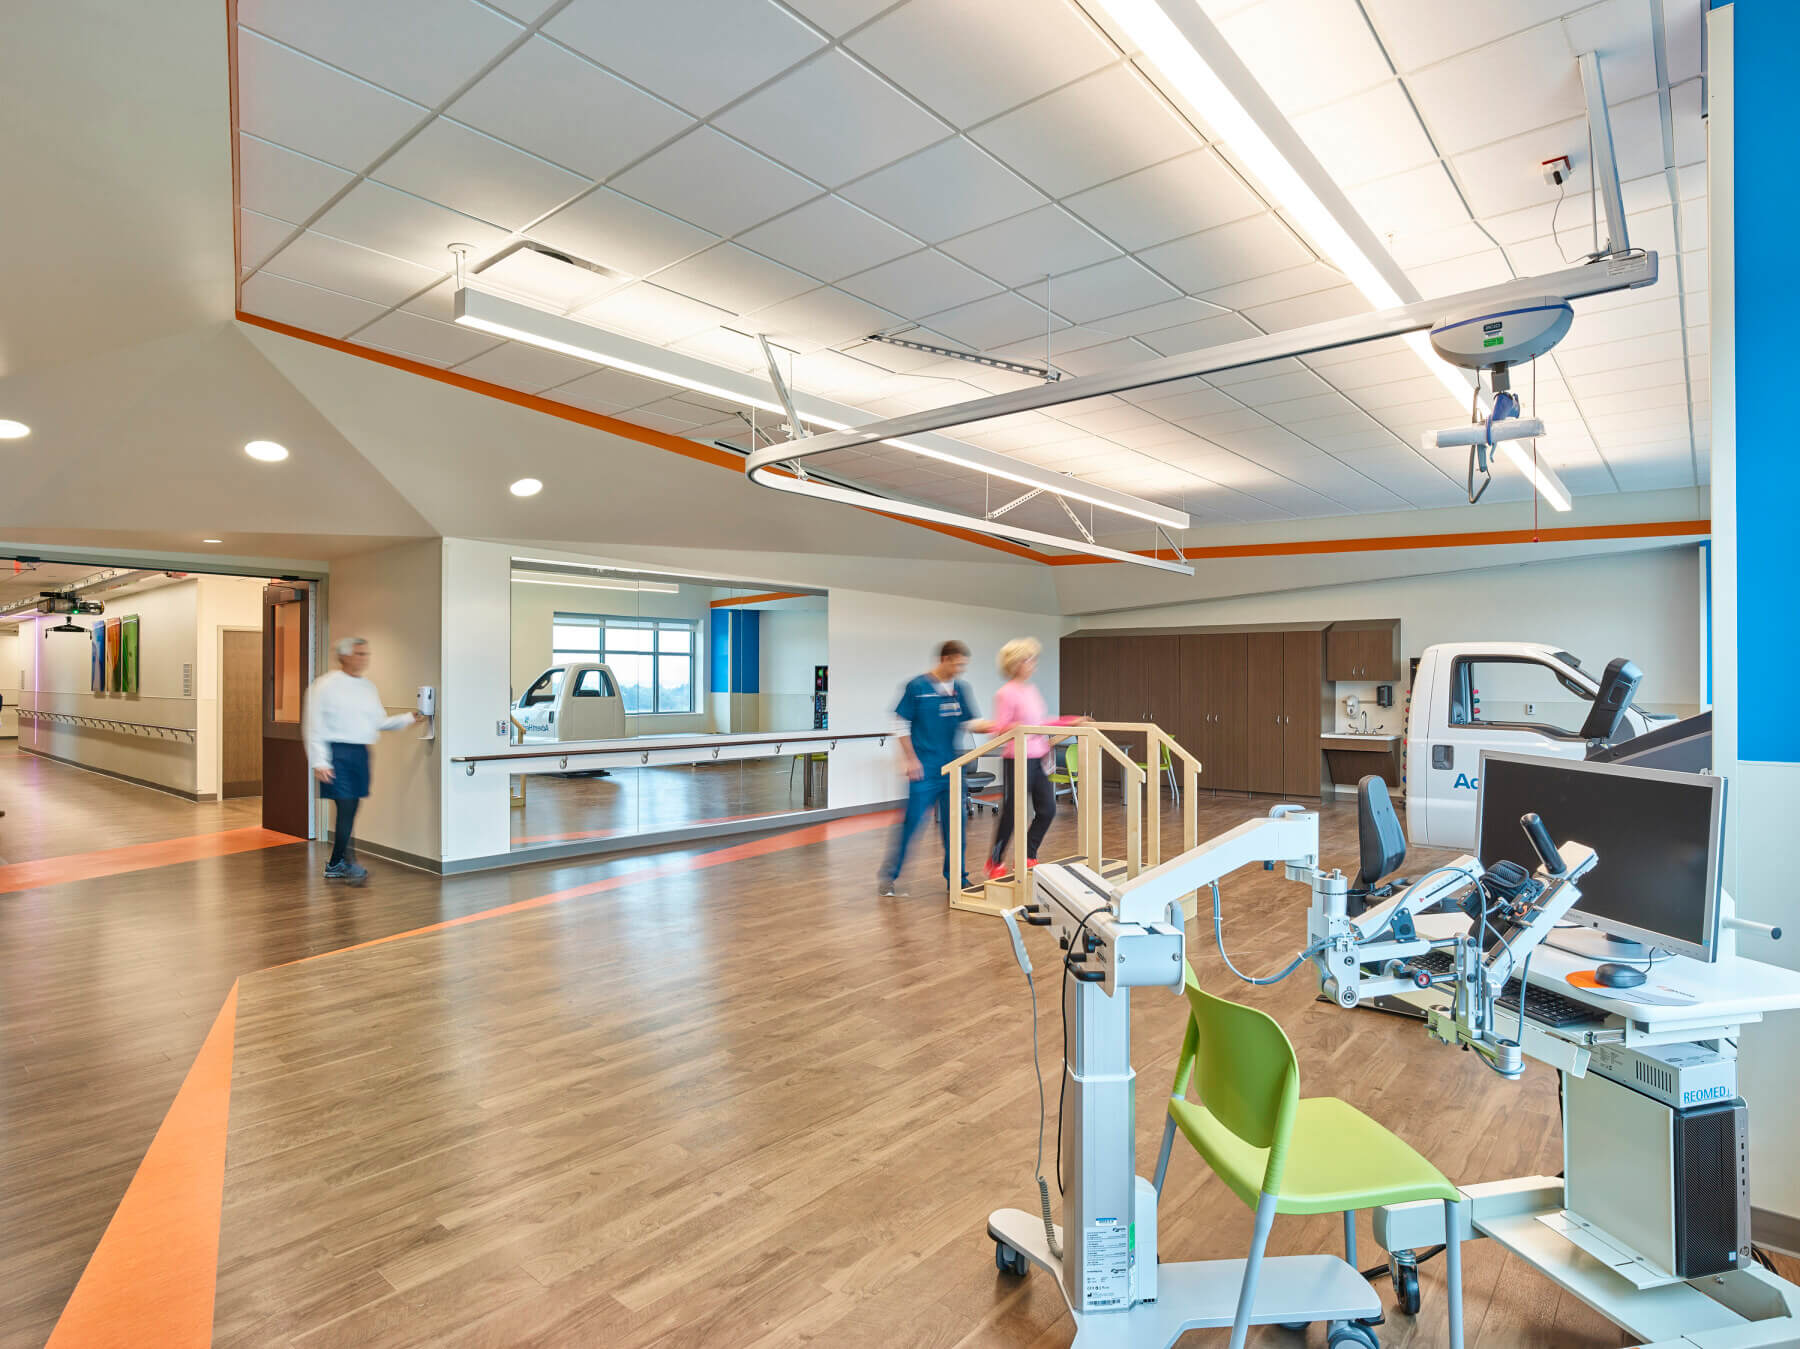 a rehabilitation space in a hospital